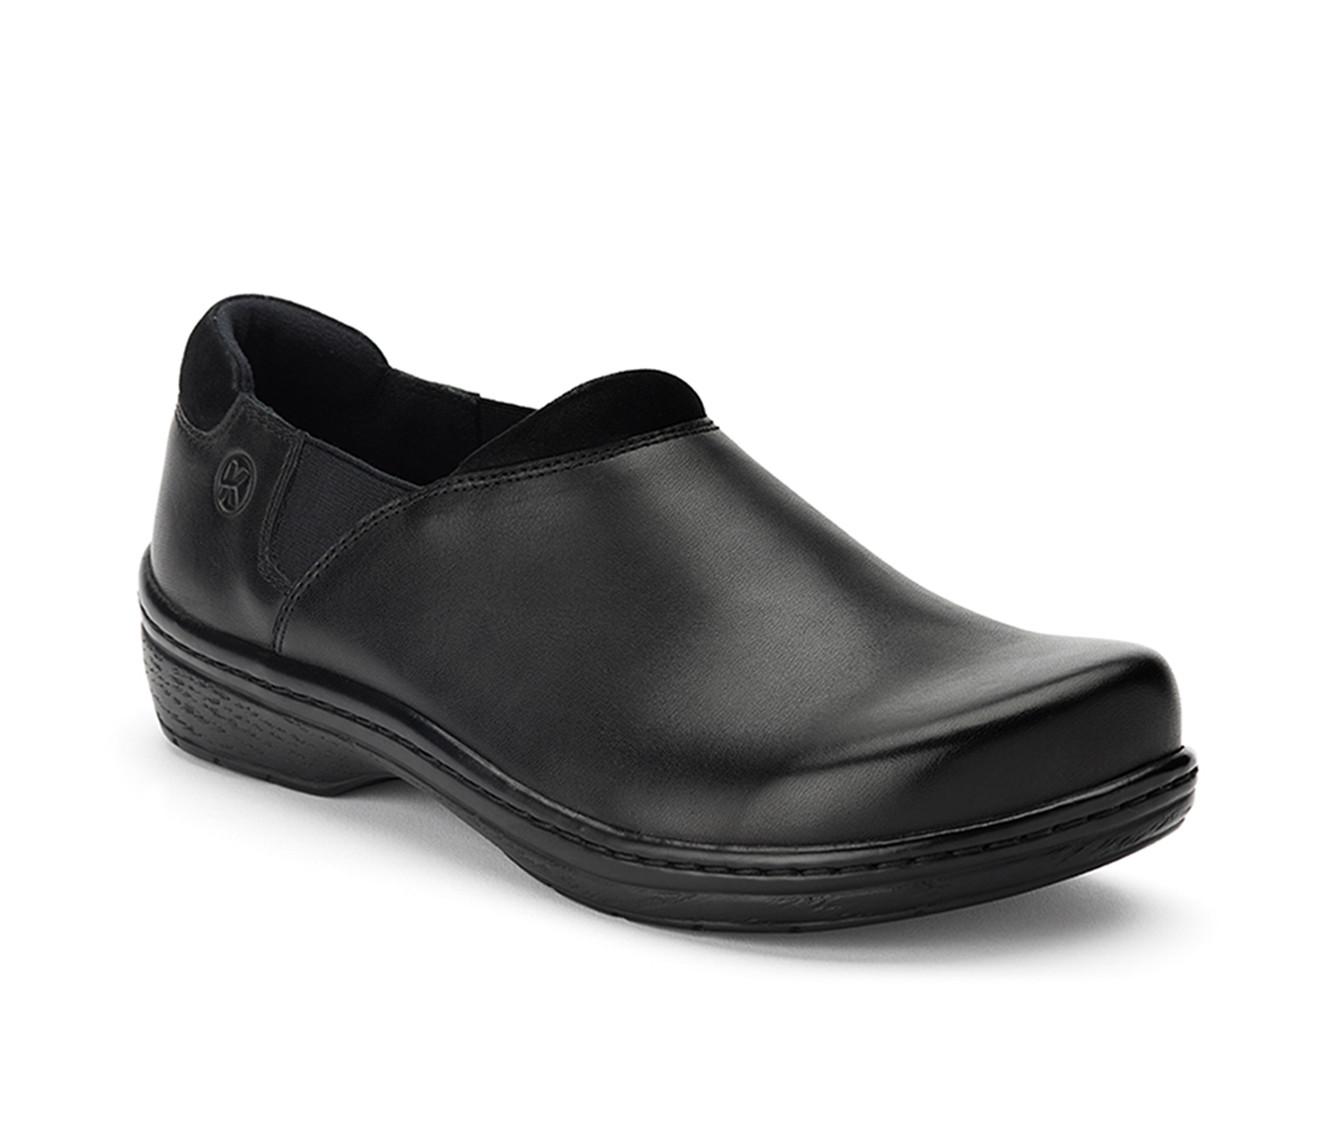 Men's KLOGS Footwear Raven Safety Shoes